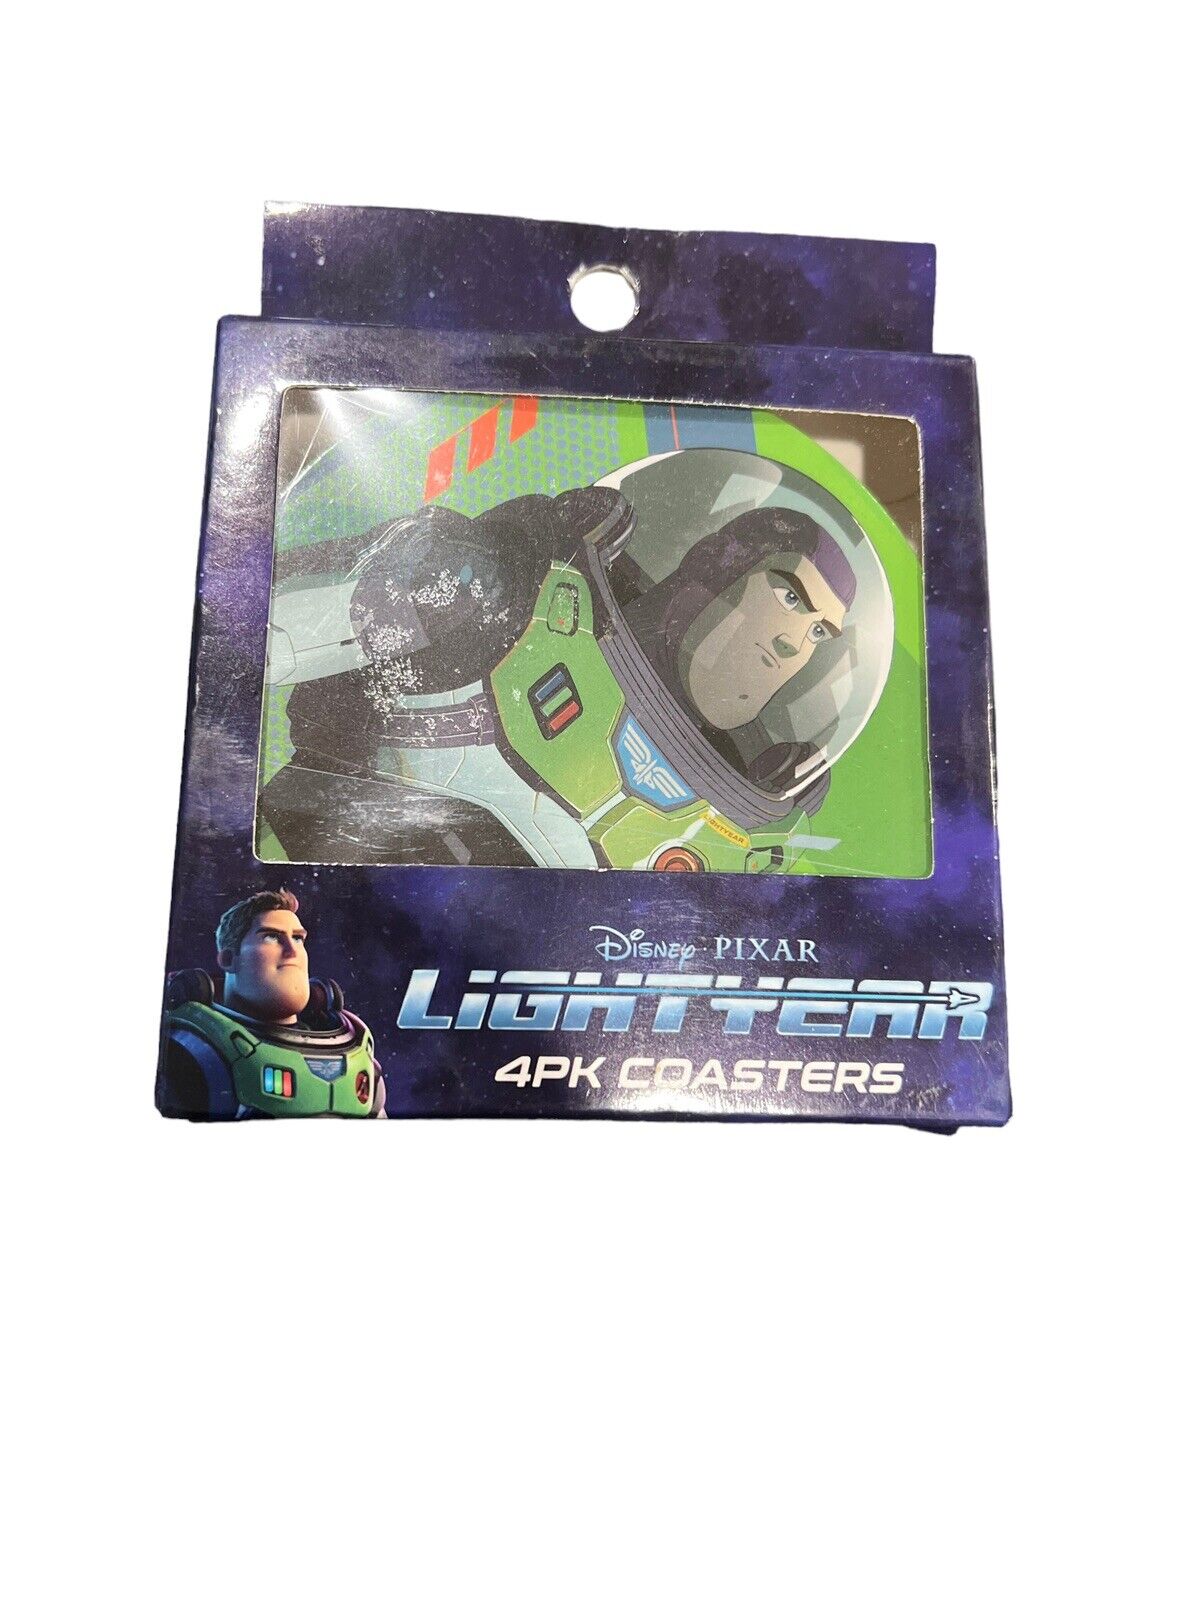 Disney Pixar Lightyear 4 Pk Coasters